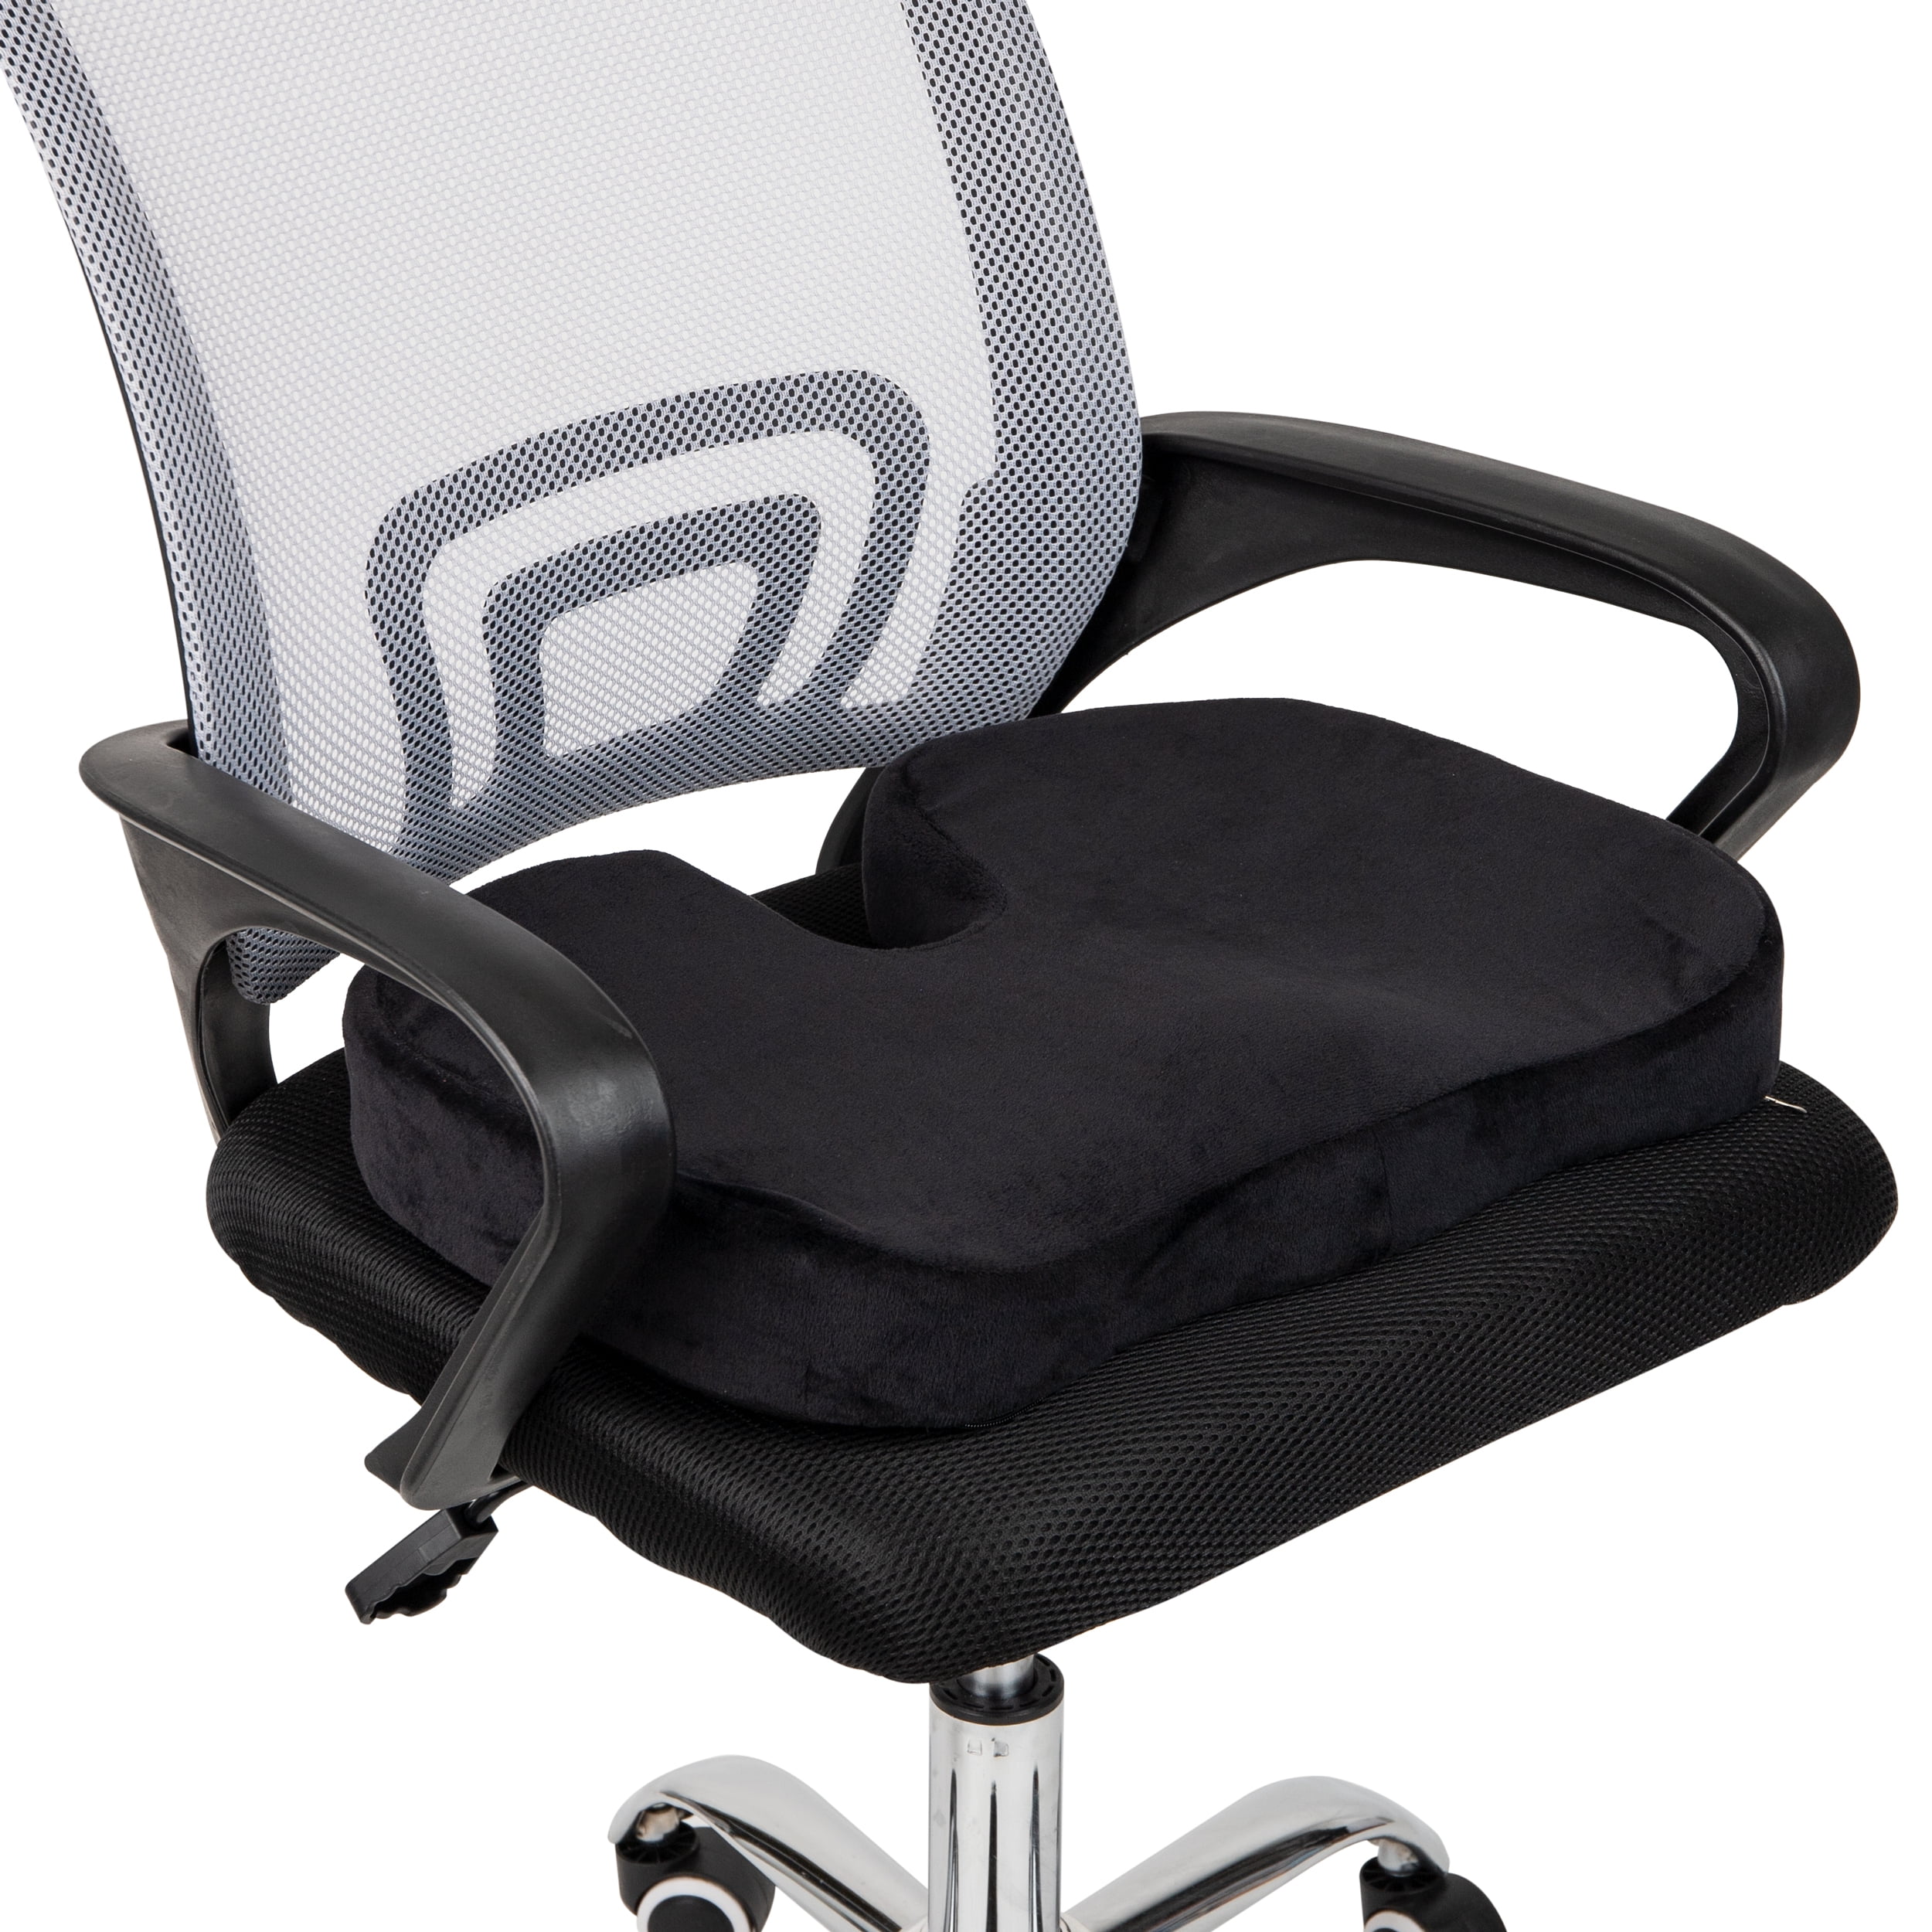 Mind Reader Orthopedic Seat Cushion - Gray